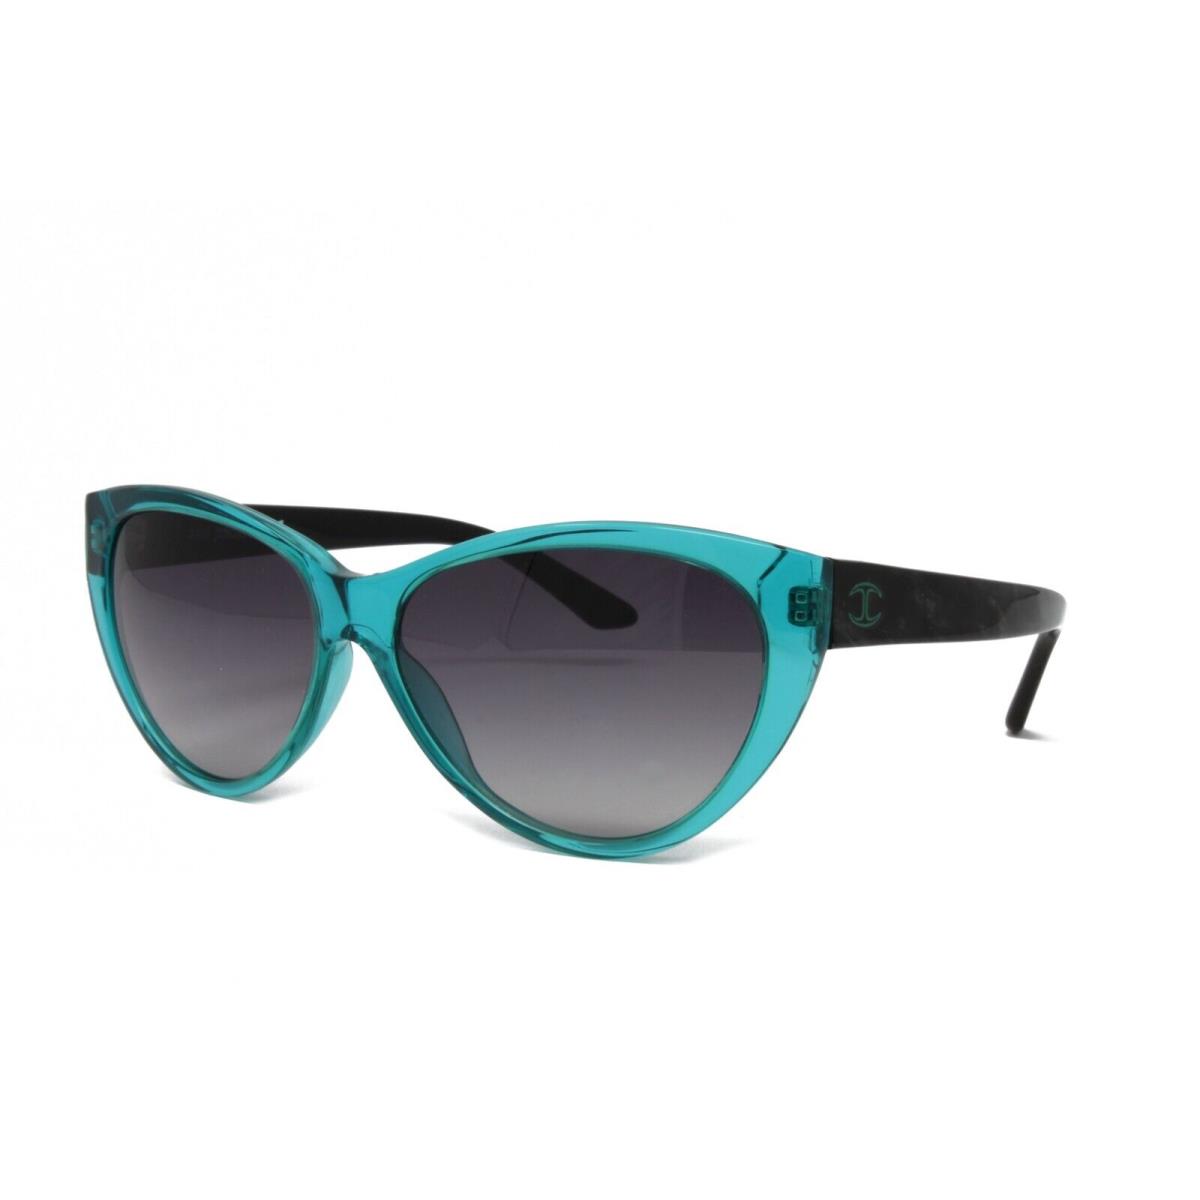 Just Cavalli Cat Eye Women`s Sunglasses JC490S 93W Turquoise Black 60mm - Frame: turquoise, Lens: Gray